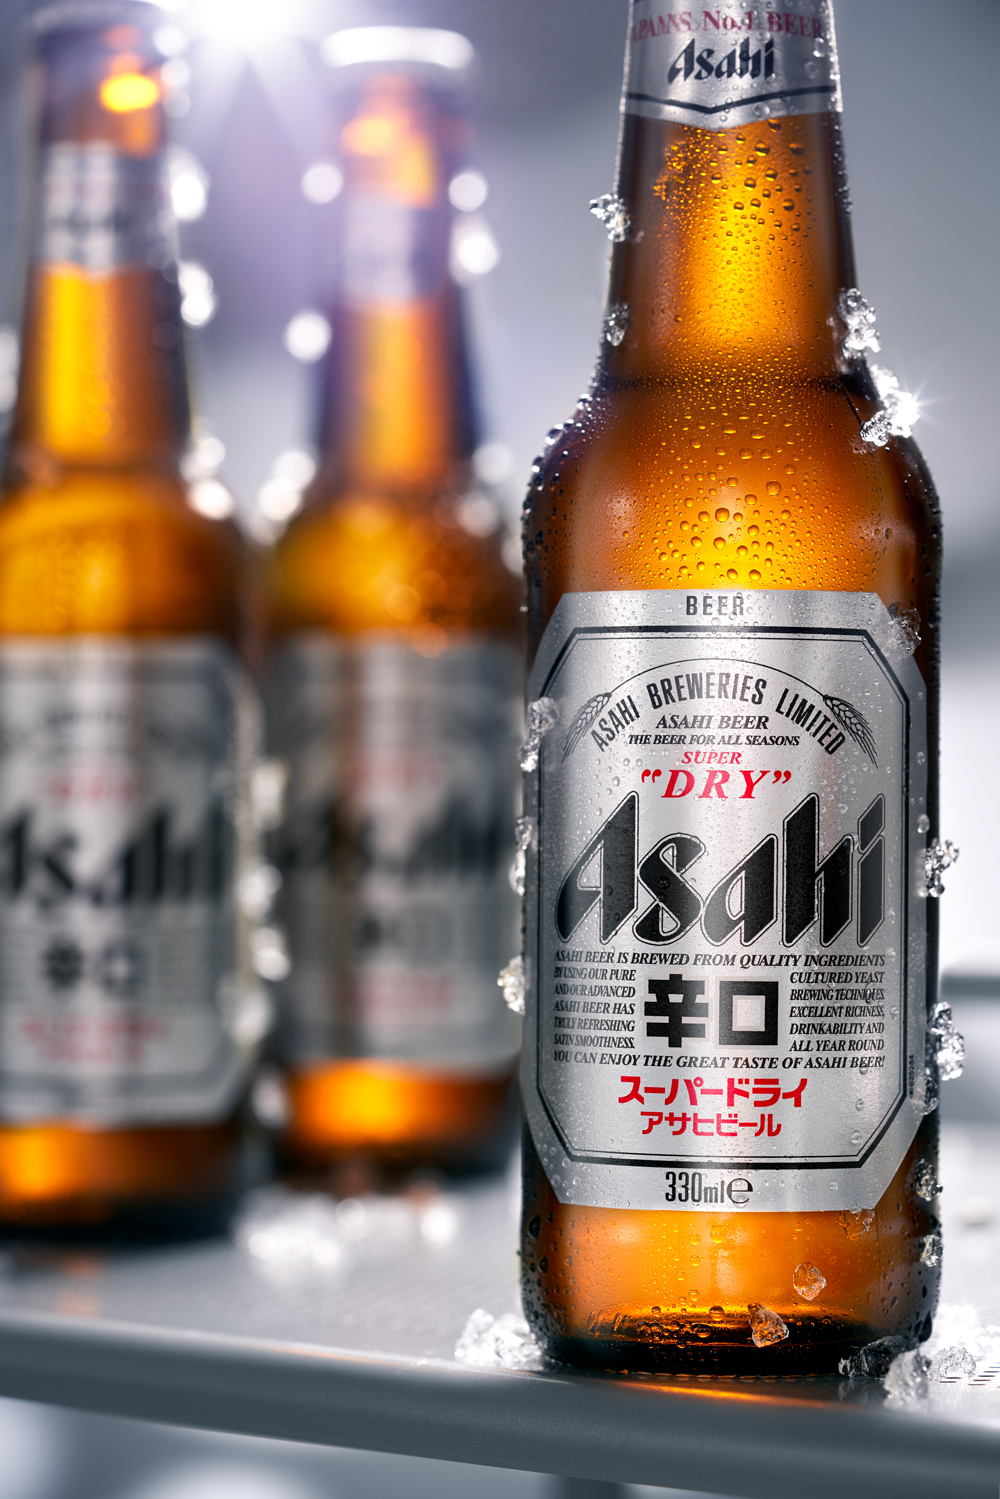 lettstudio_asahi_beer_beverage_photography2.jpg